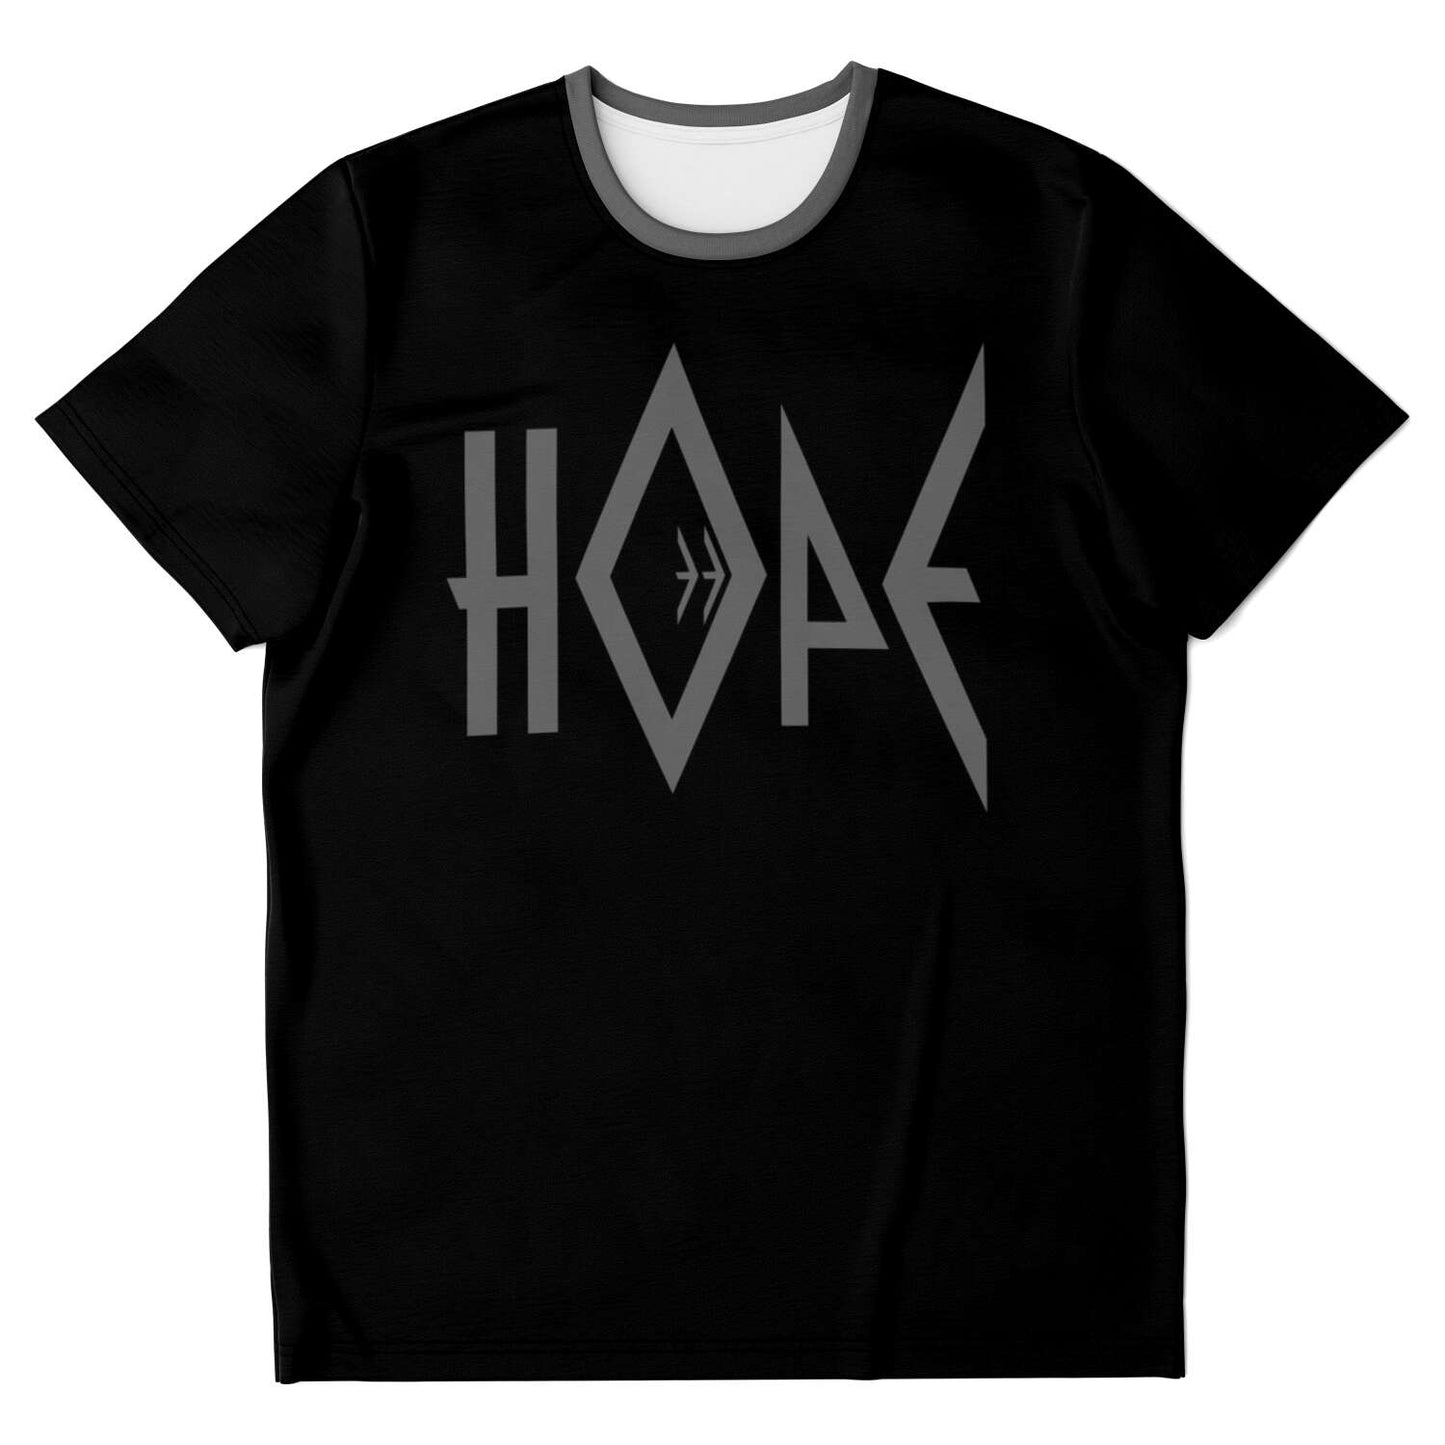 Unisex T-Shirt "HOPE" -PEACE GANG